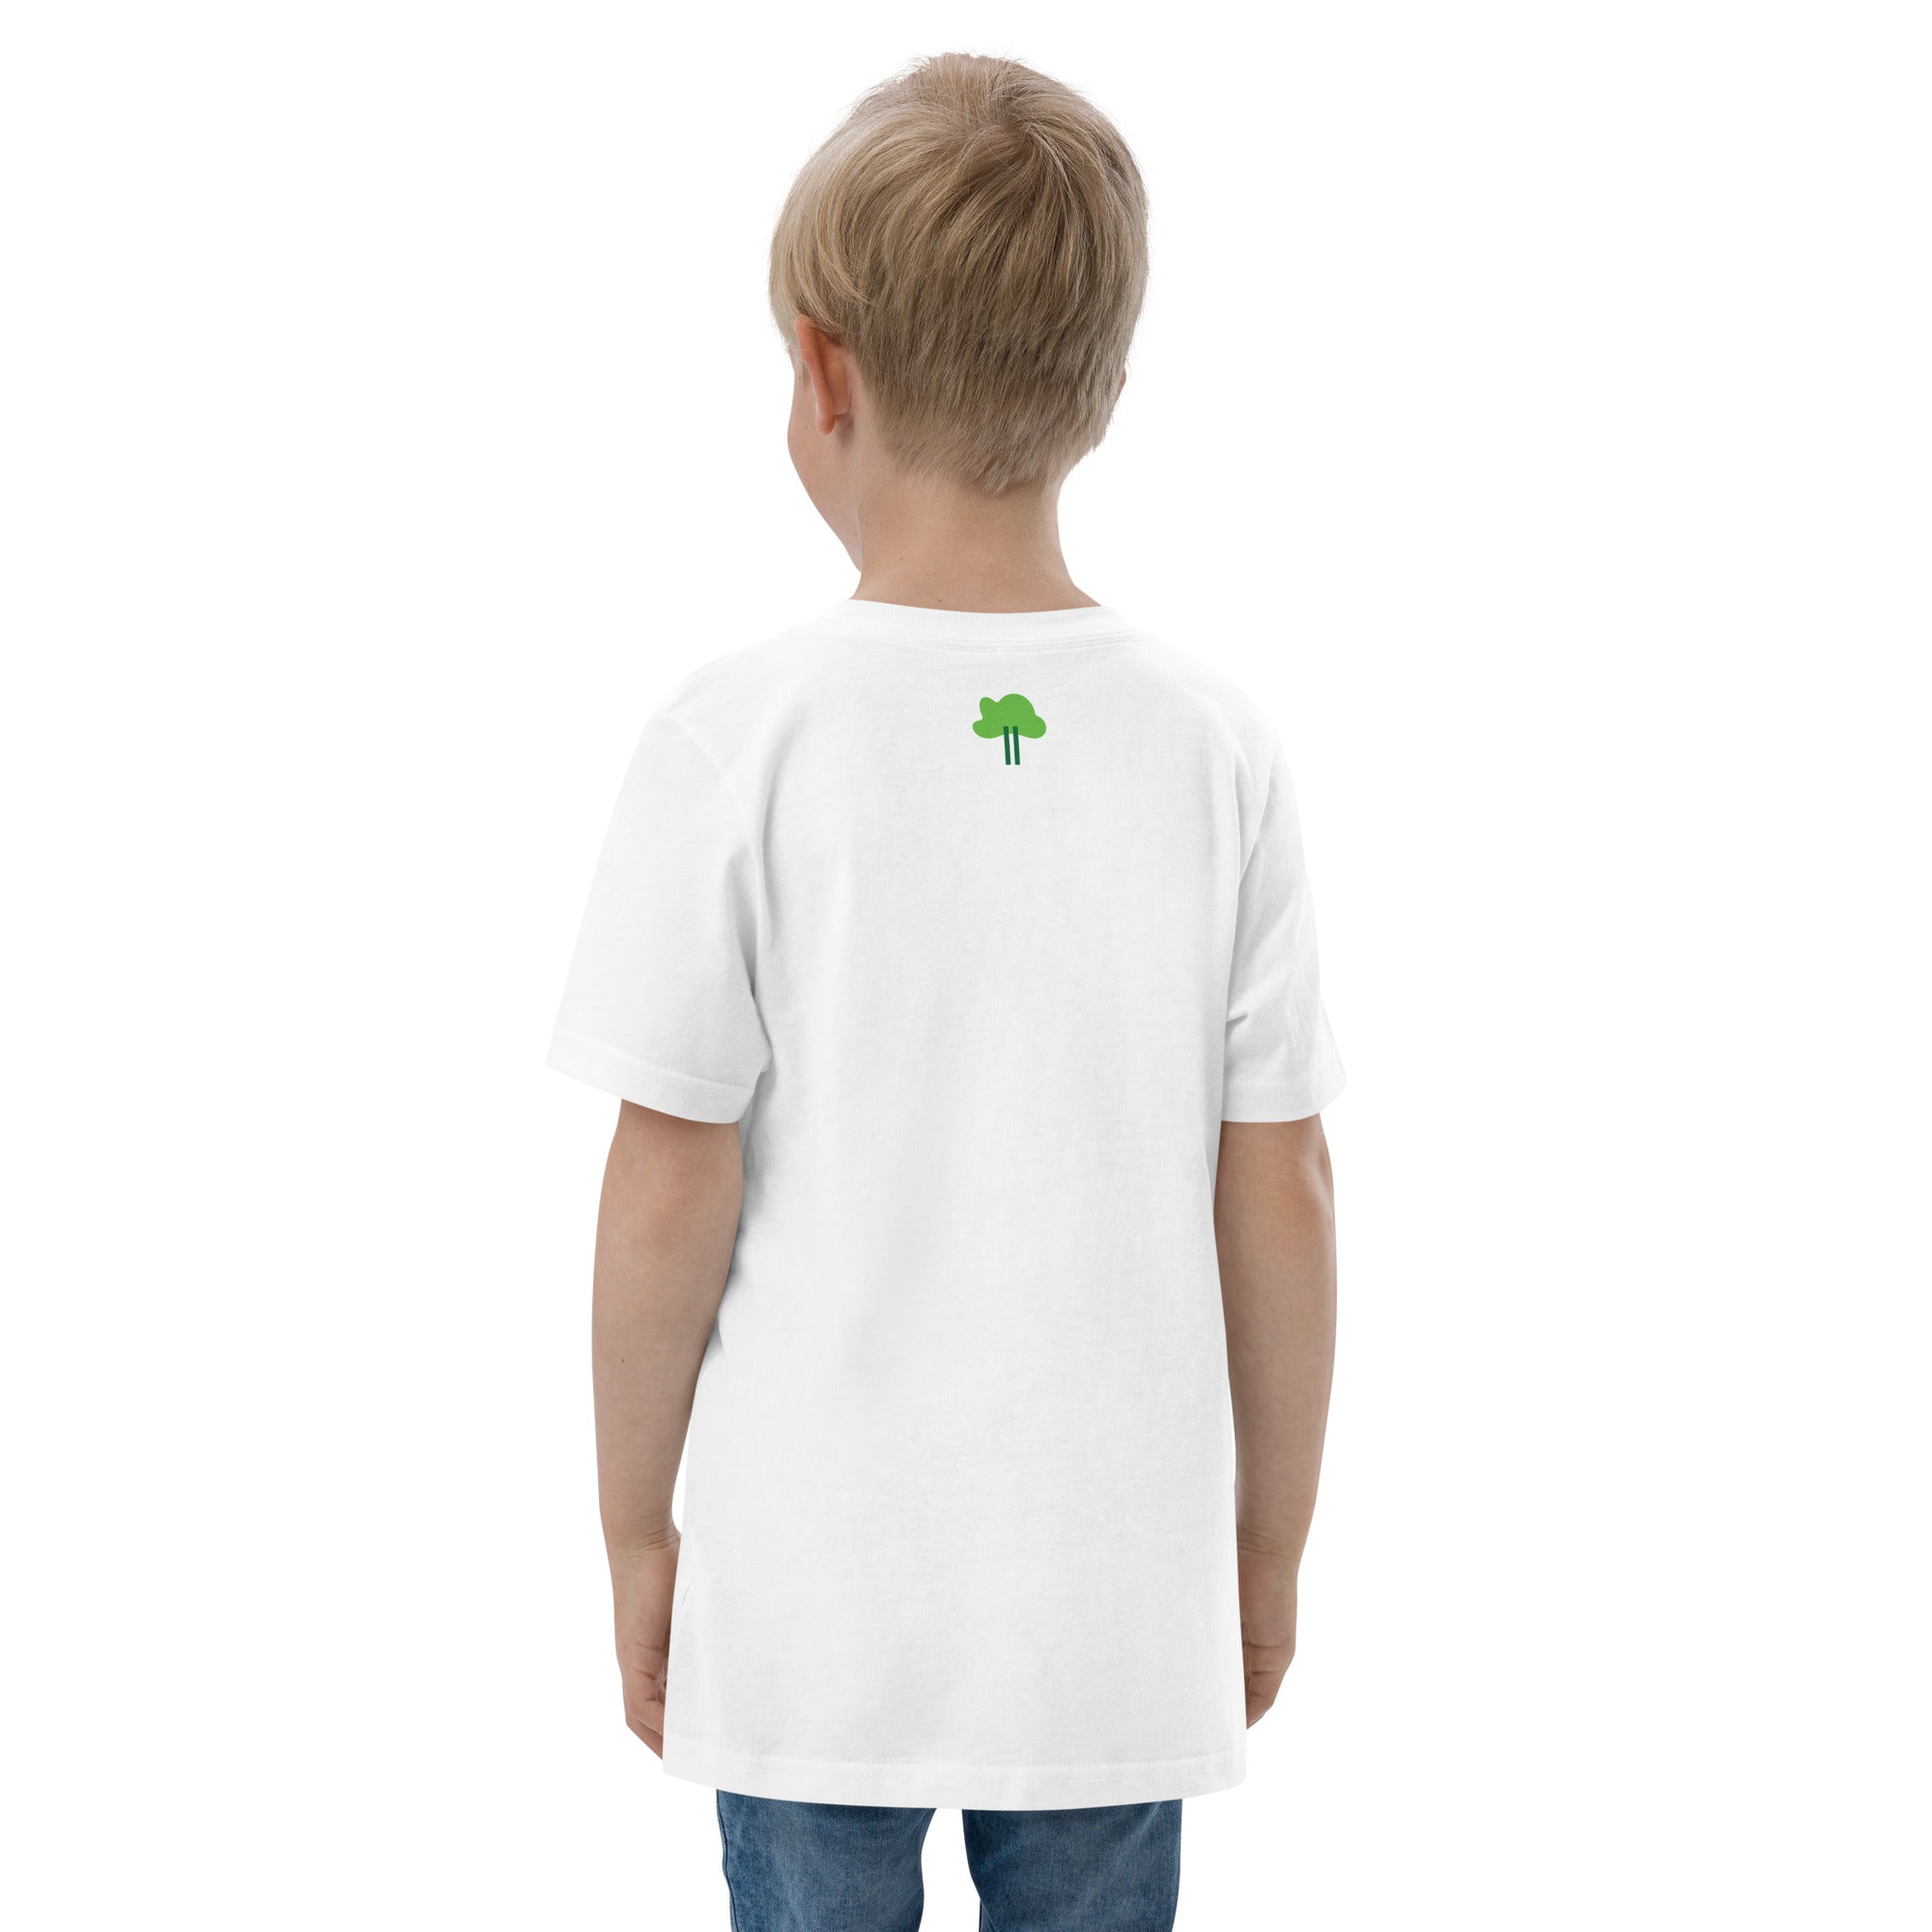 II Temp - Lago - K1 | Youth jersey t-shirt